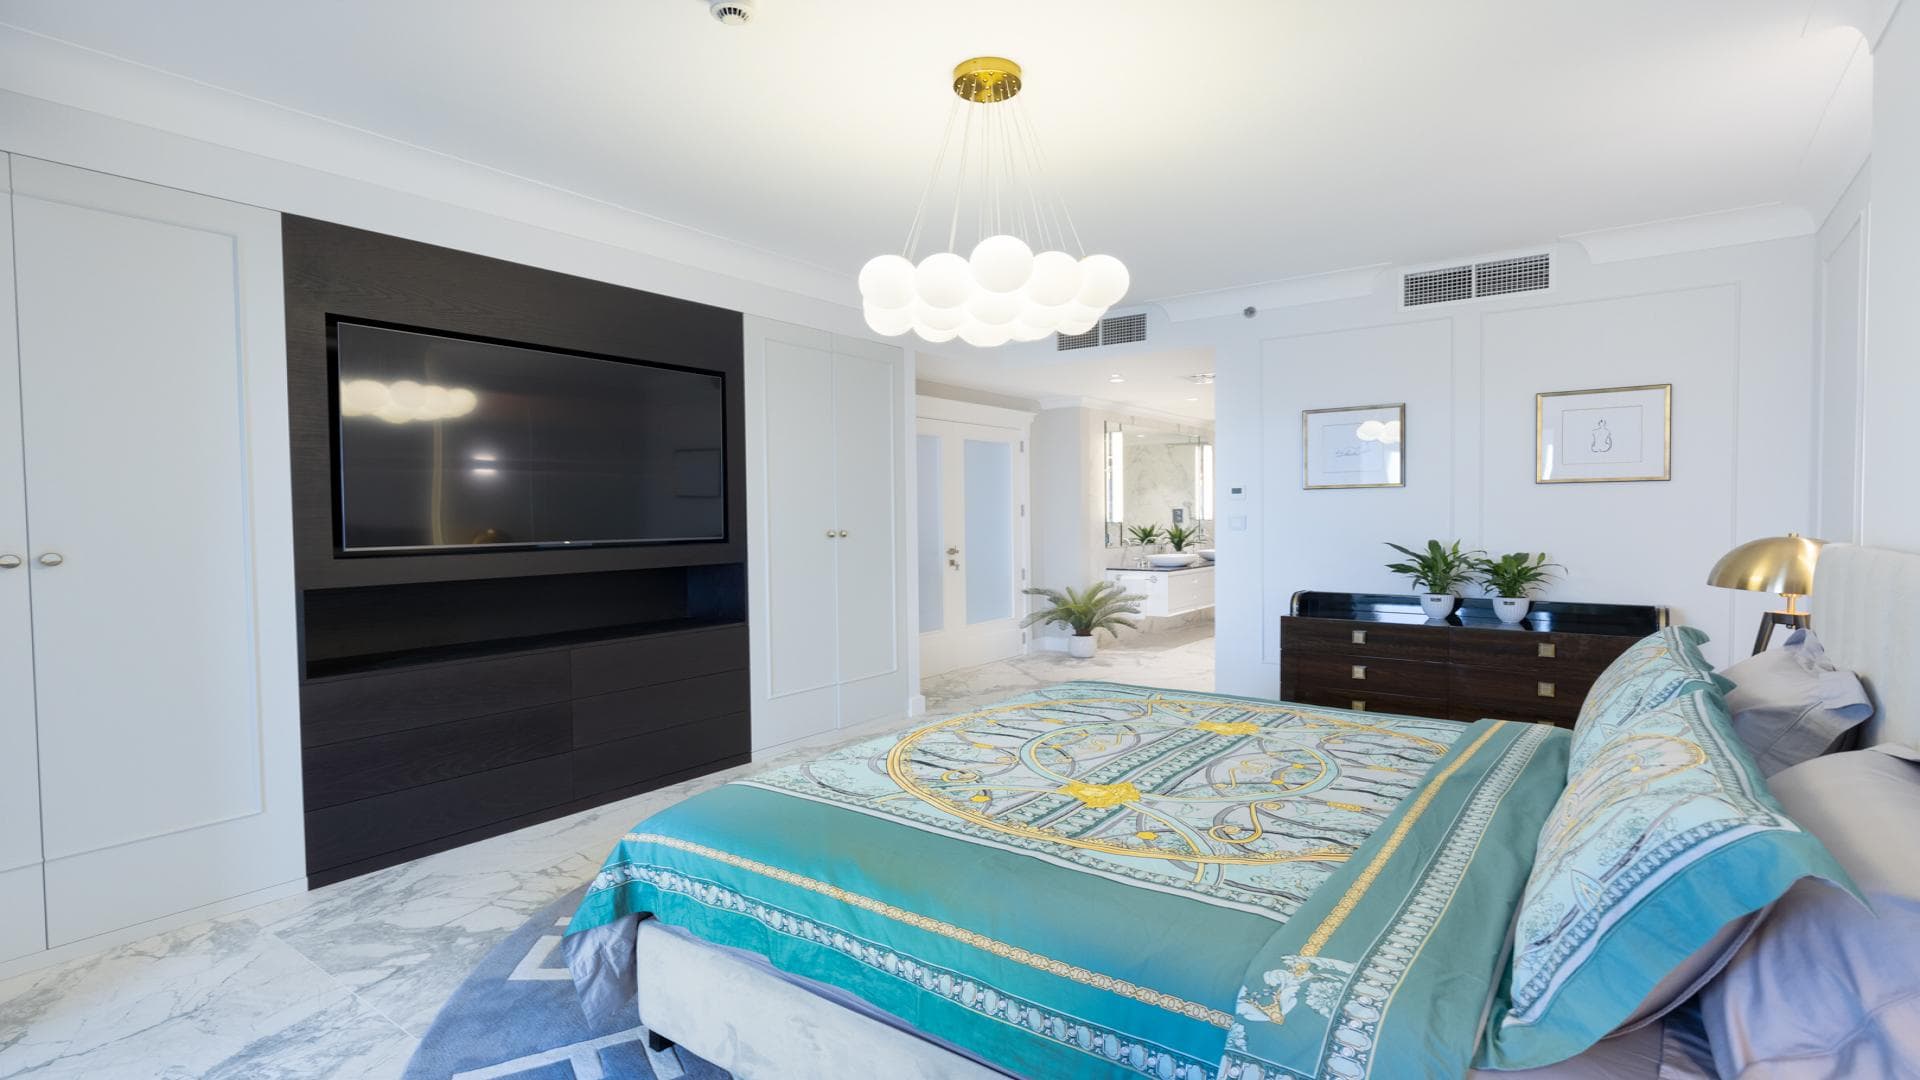 2 Bedroom Apartment For Rent Kingdom Of Sheba Lp20022 17077c03a909b800.jpg